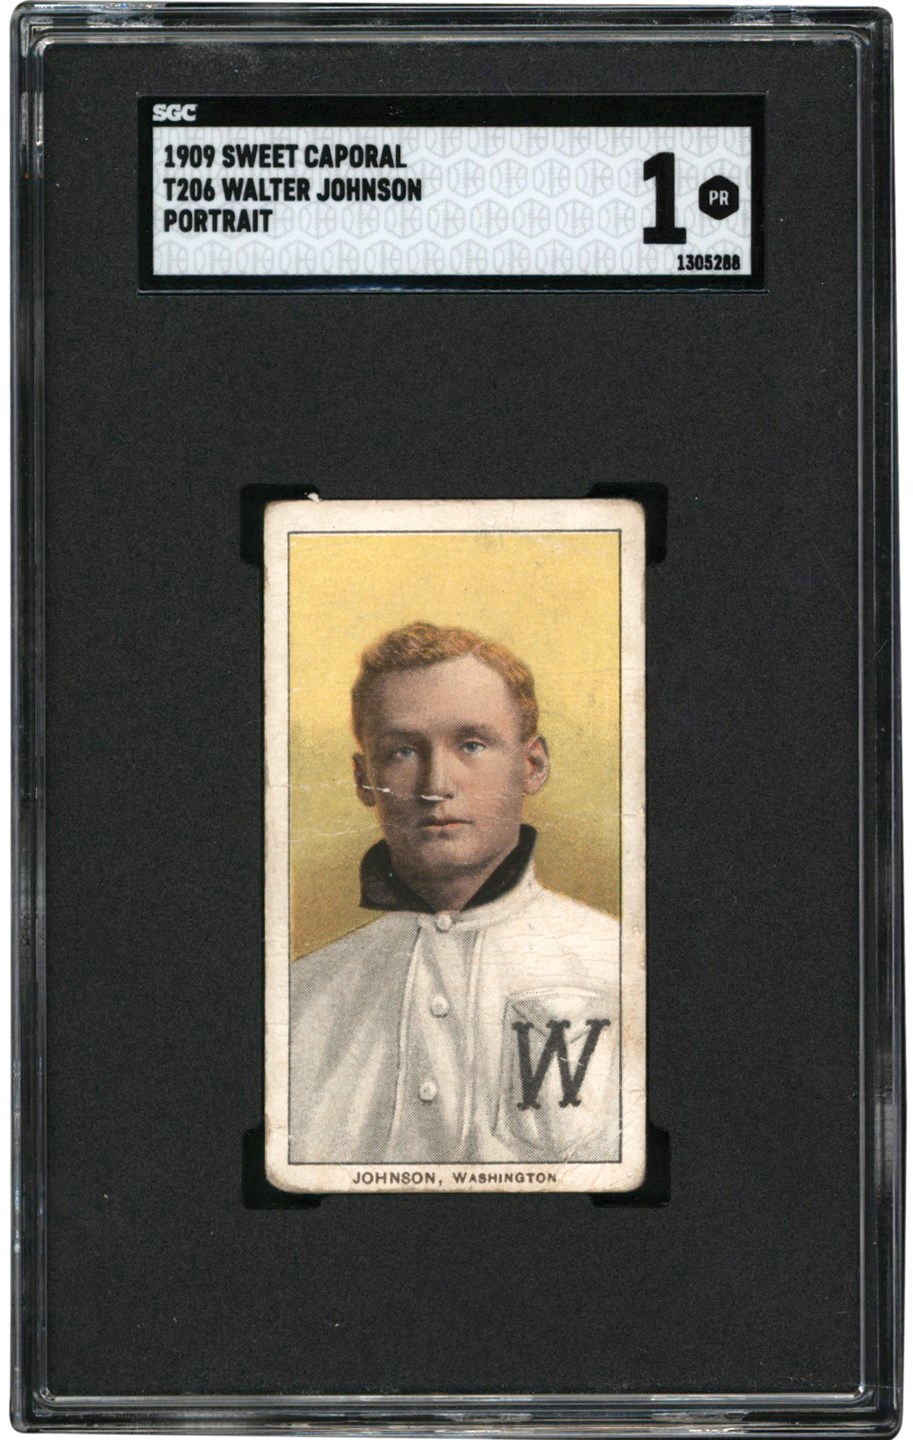 - 1909-11 T206 Walter Johnson Portrait Sweet Caporal 150 Card SGC PR 1